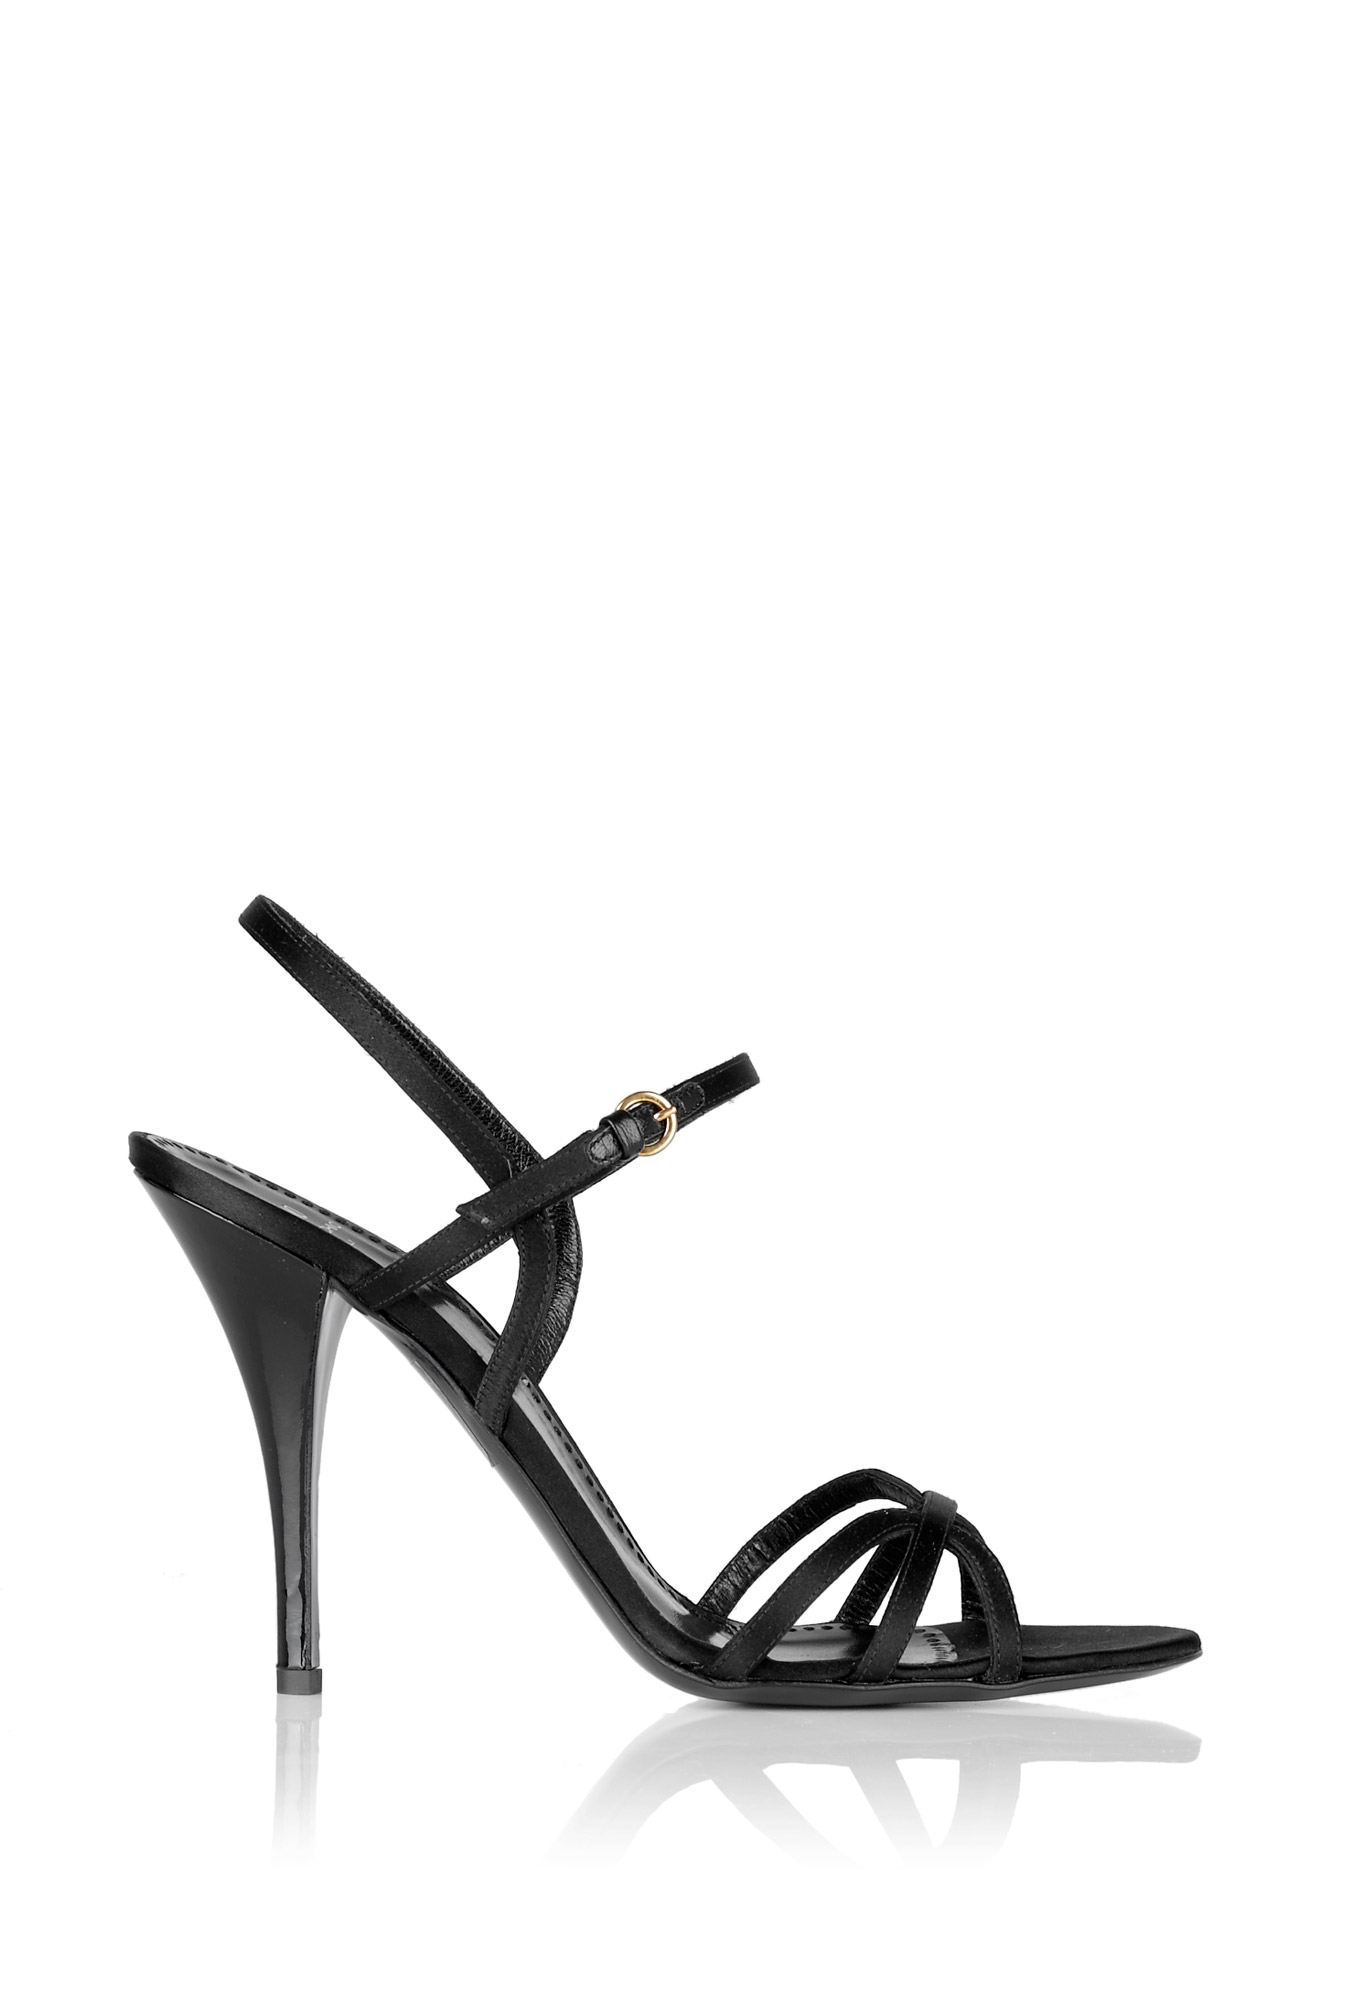 Moschino Cheap & Chic Black Strappy High Heel Sandal in Black | Lyst